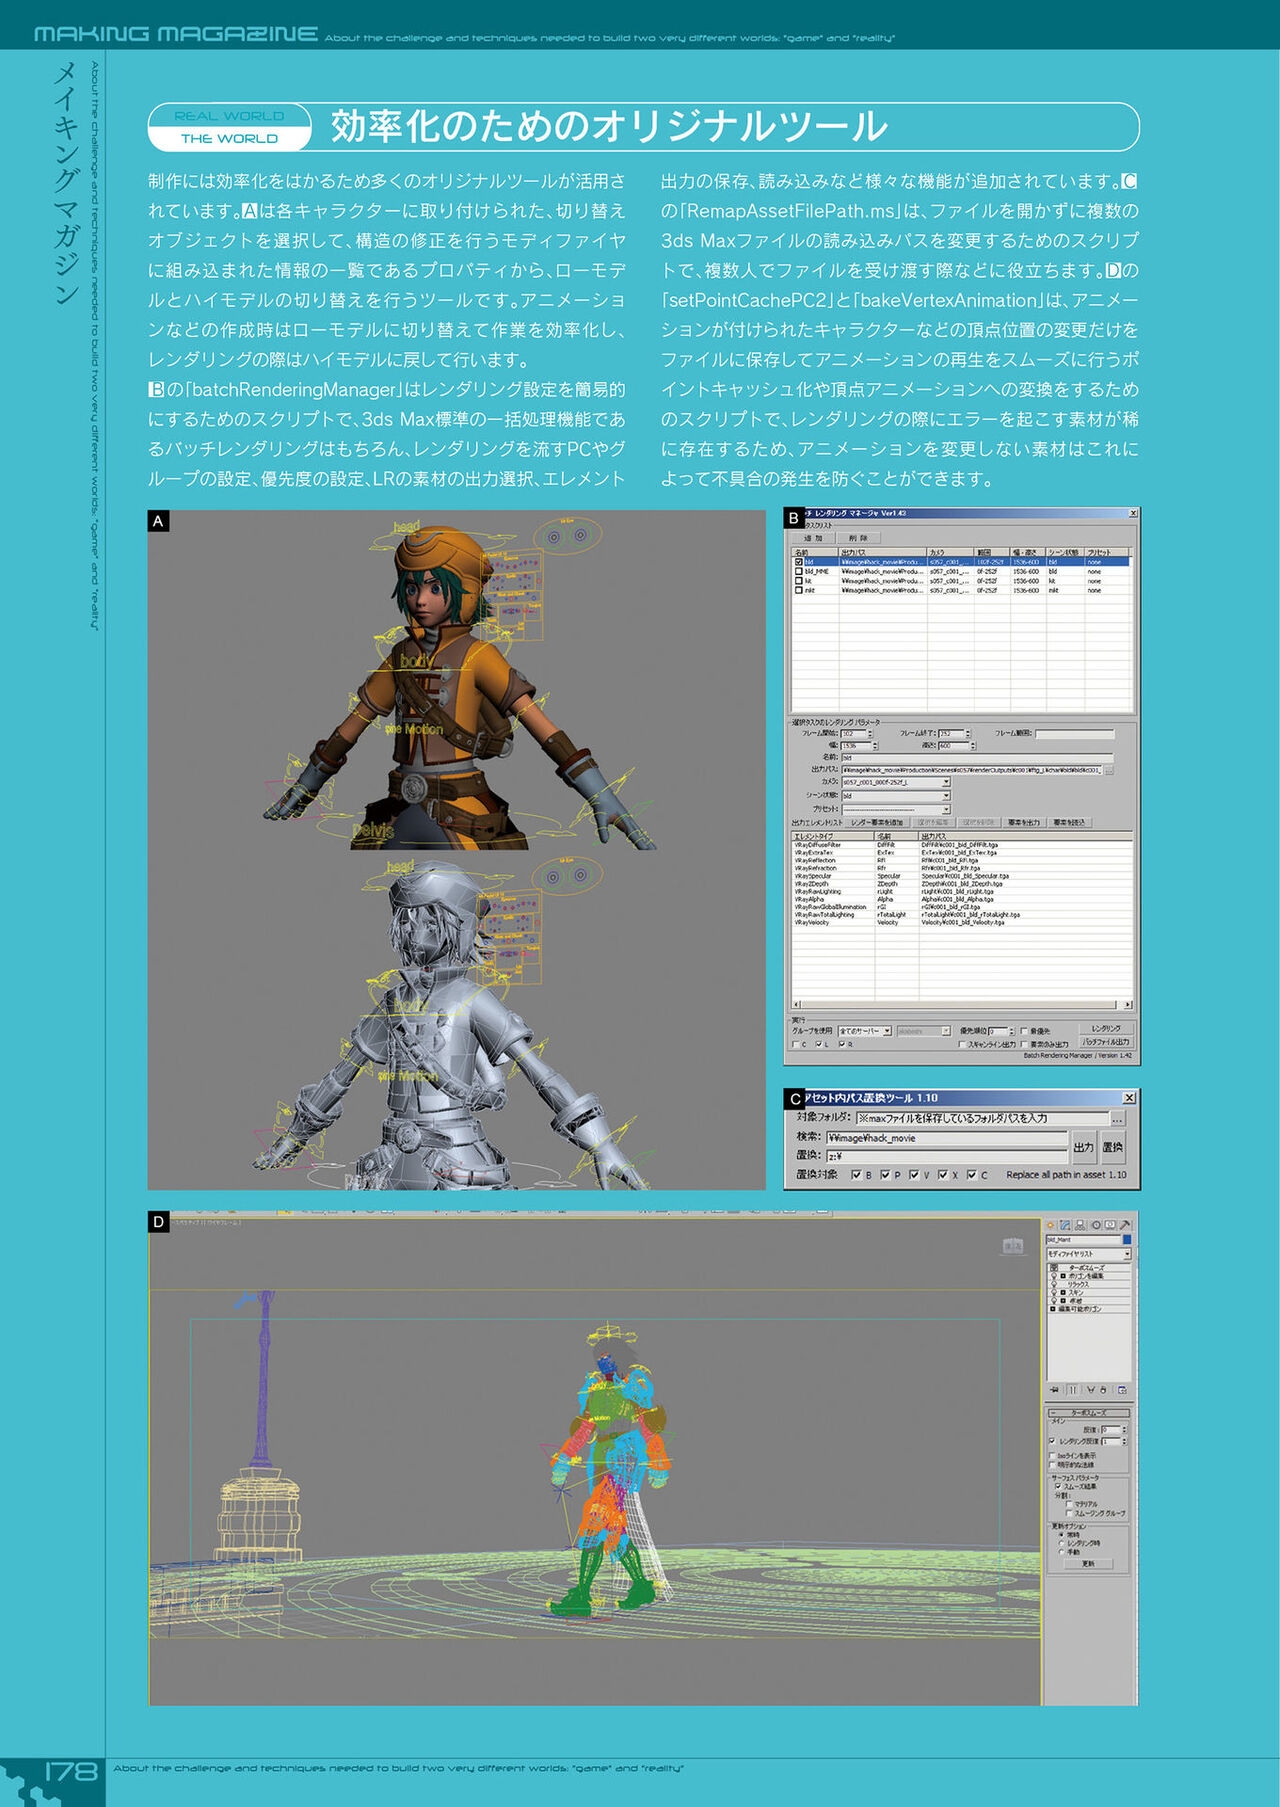 Dot Hack Sekai-no Muko ni  +Versus Complete Set  Documentation .hack //Archives _ 05 180